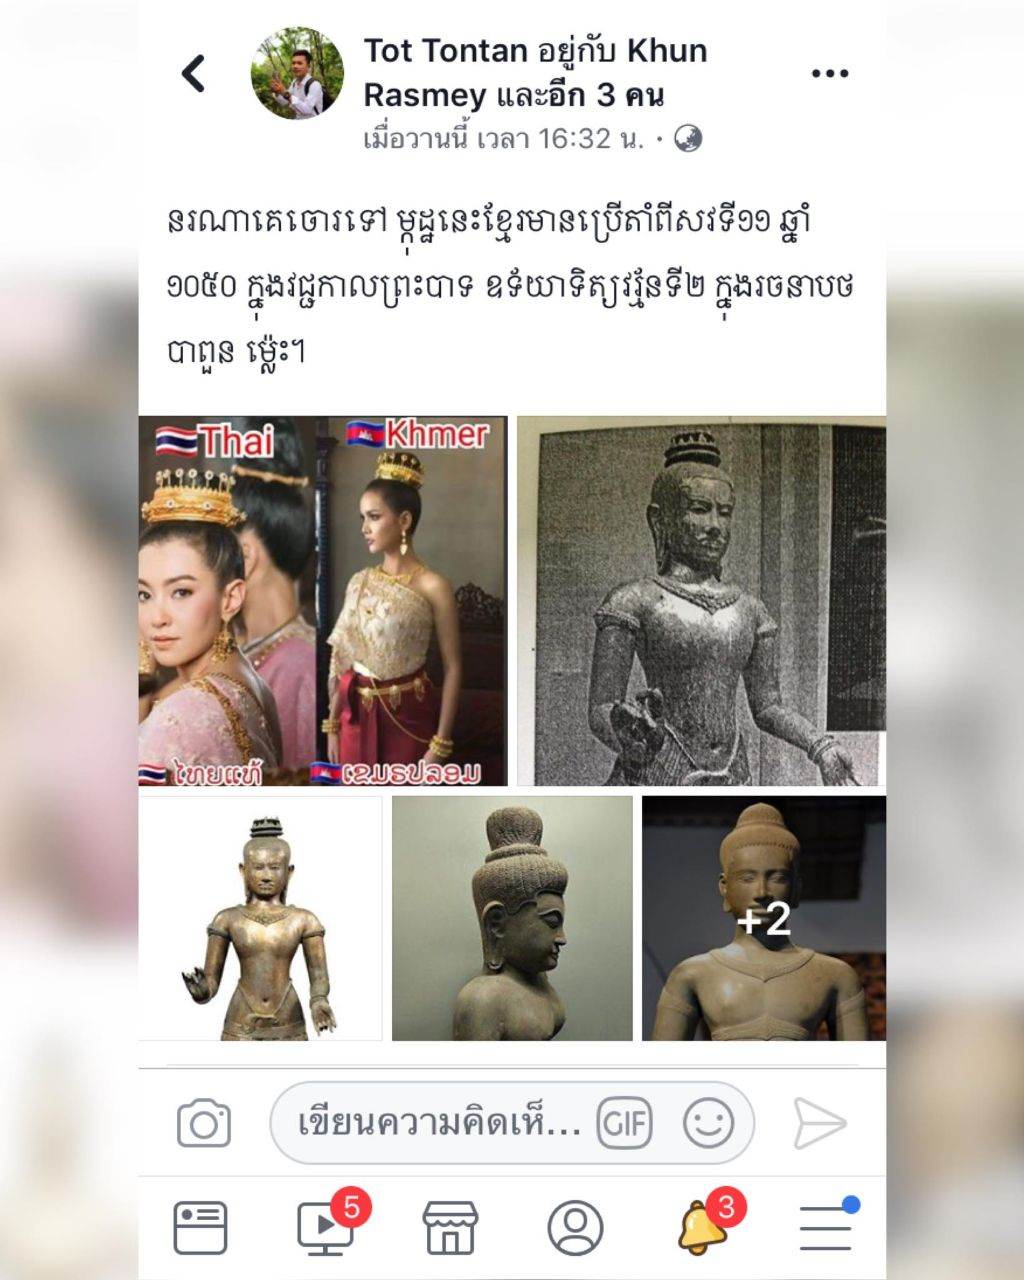 Golden Boy or Jayavarman VI Statue | THAILAND 🇹🇭